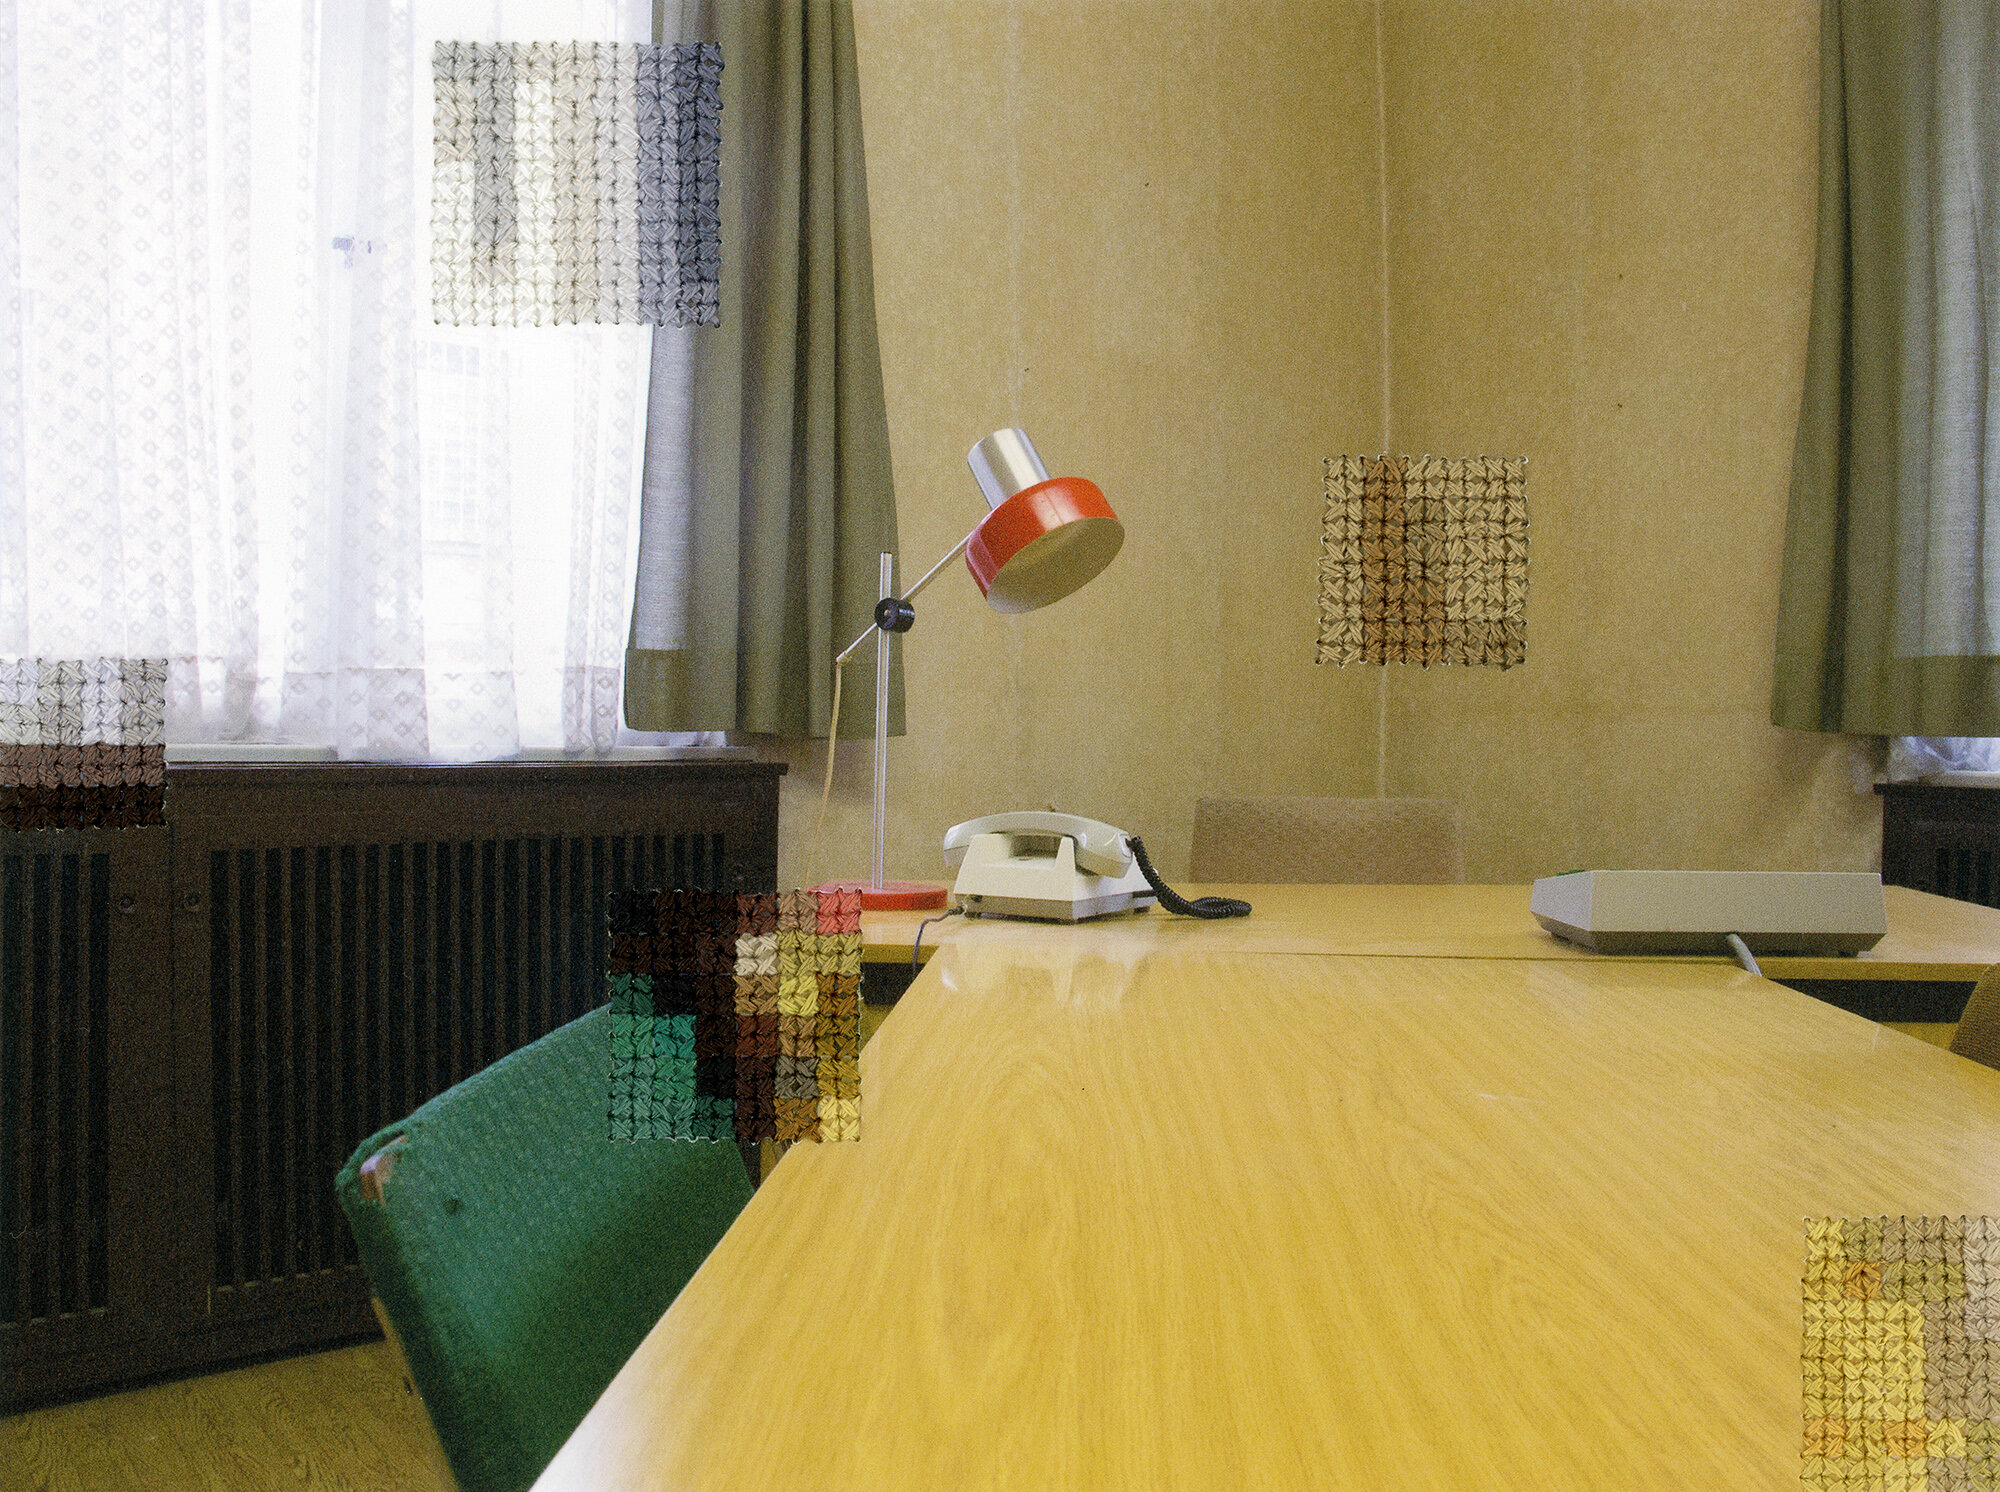 Interrogation Room of the State Secret Police, Hohenschoenhausen